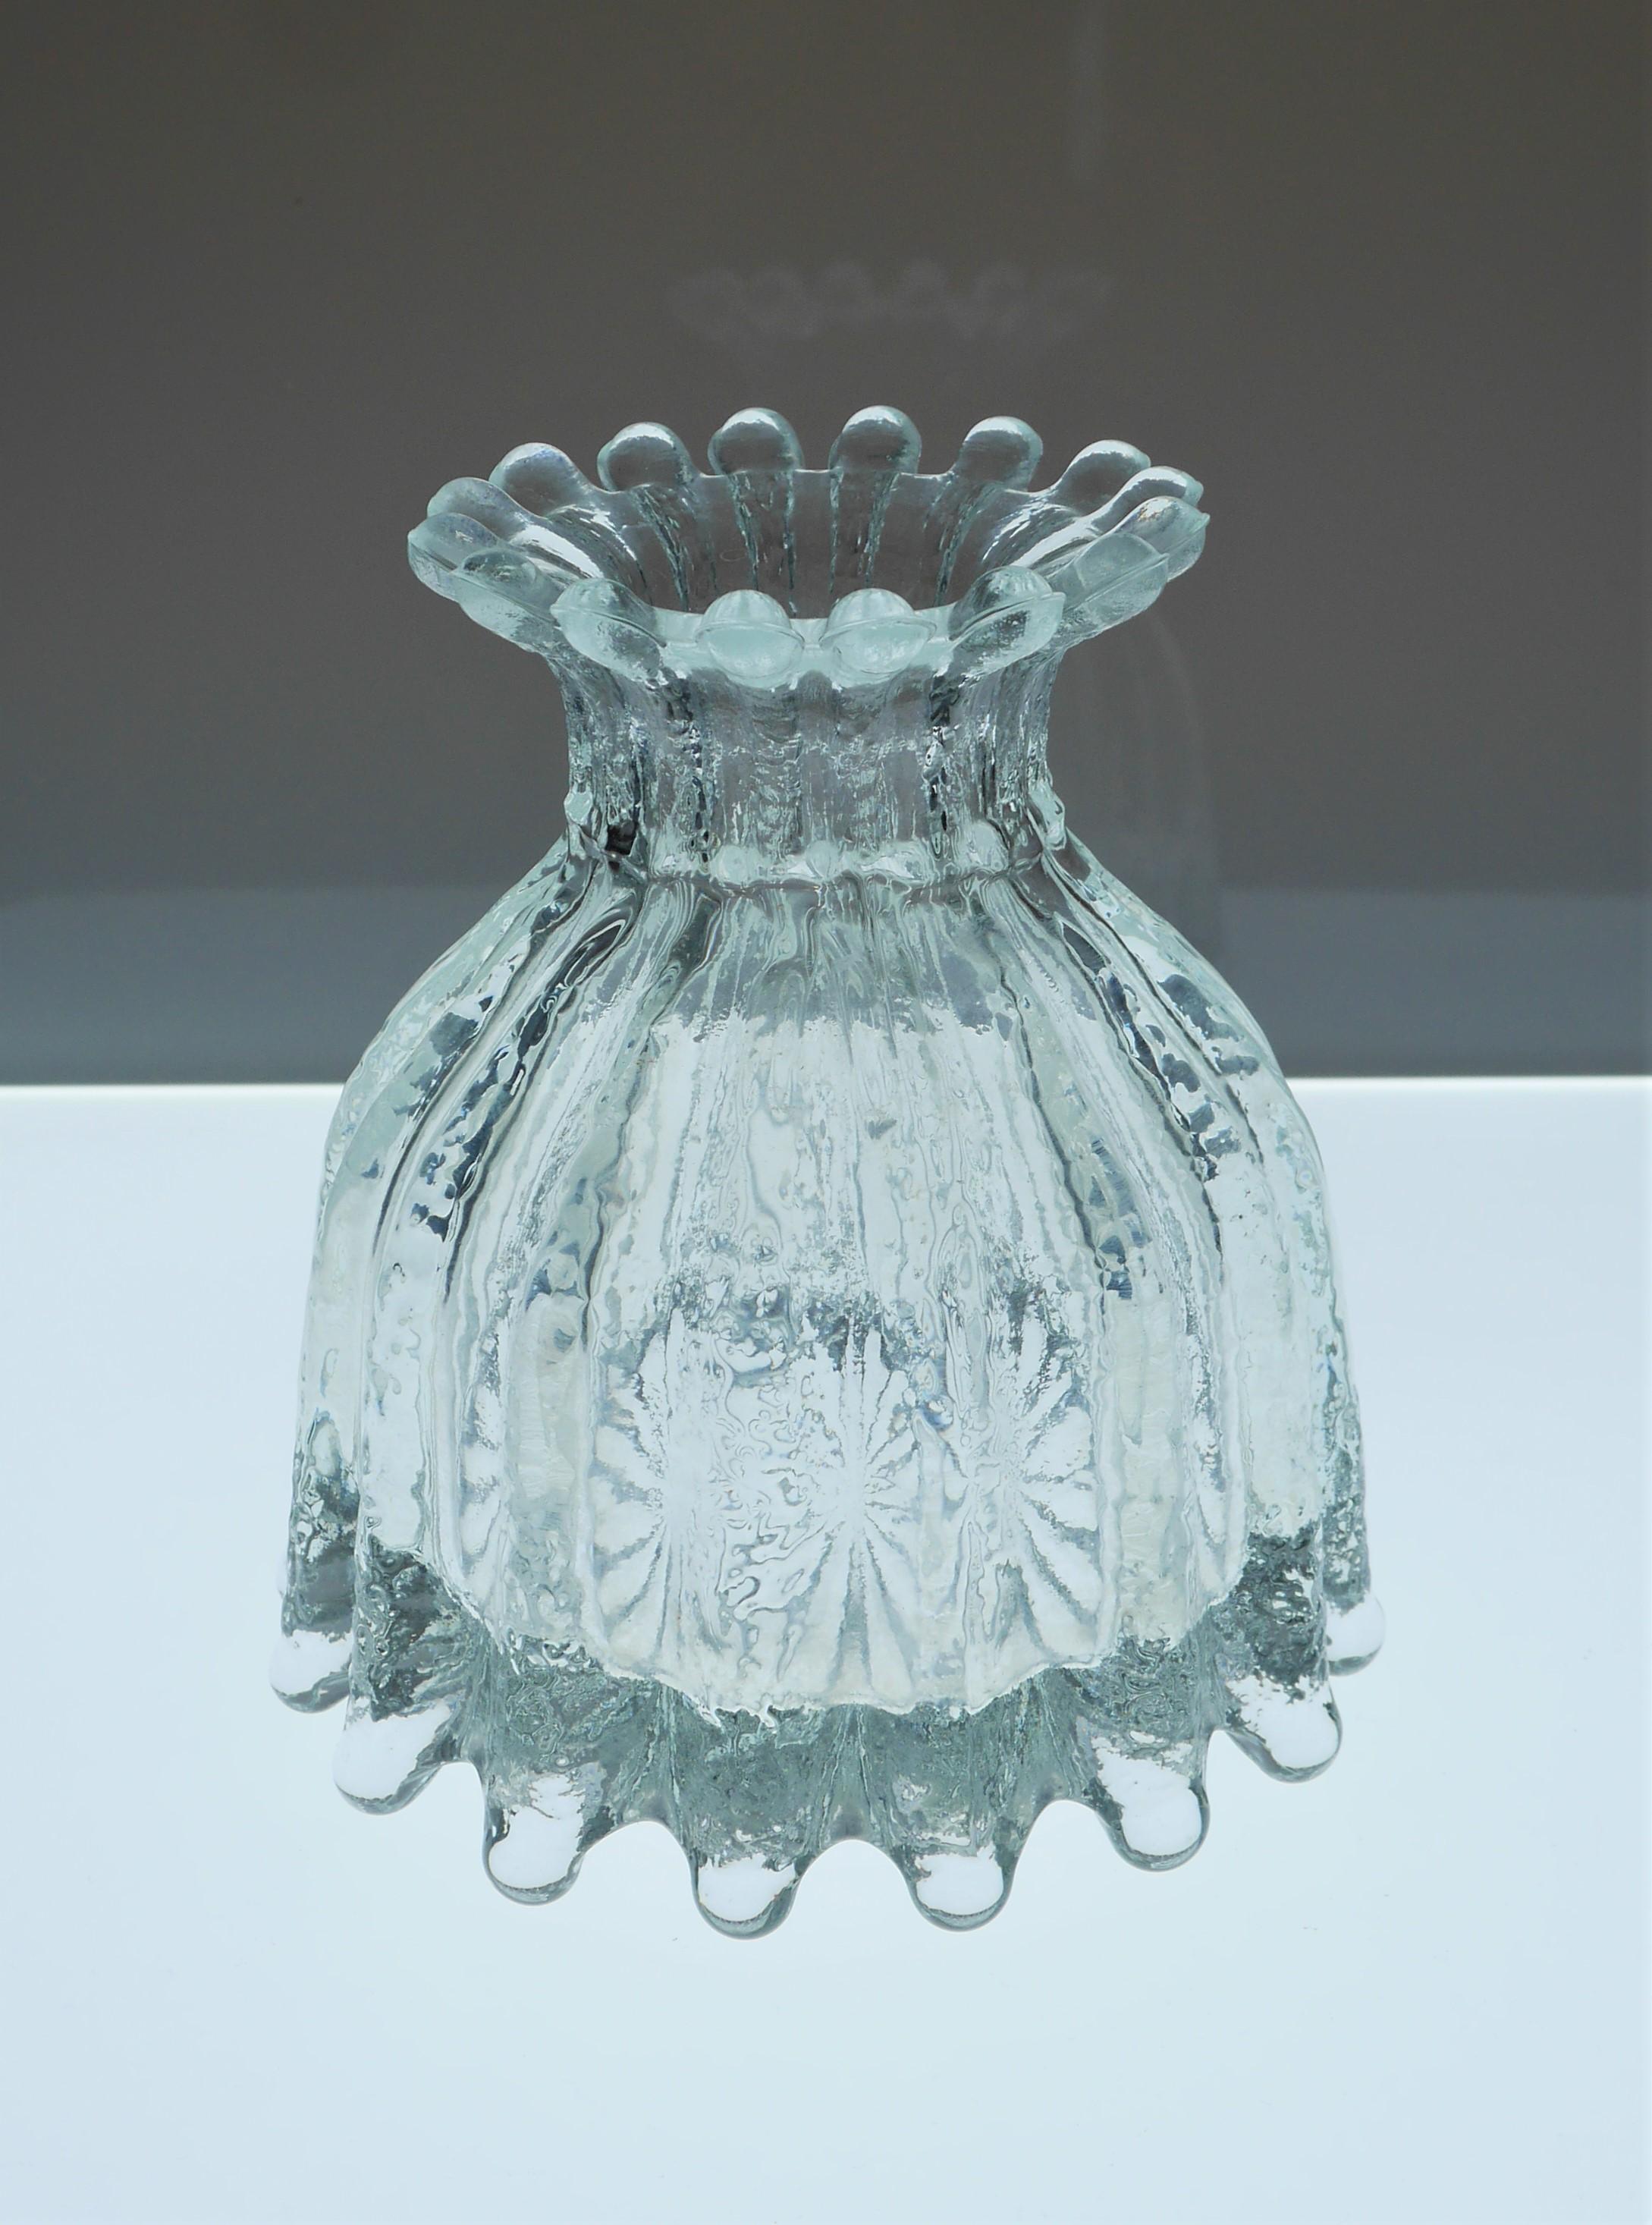 Hand-Crafted Vase from Sklo Union by Vladislav Urban, Czech Republic